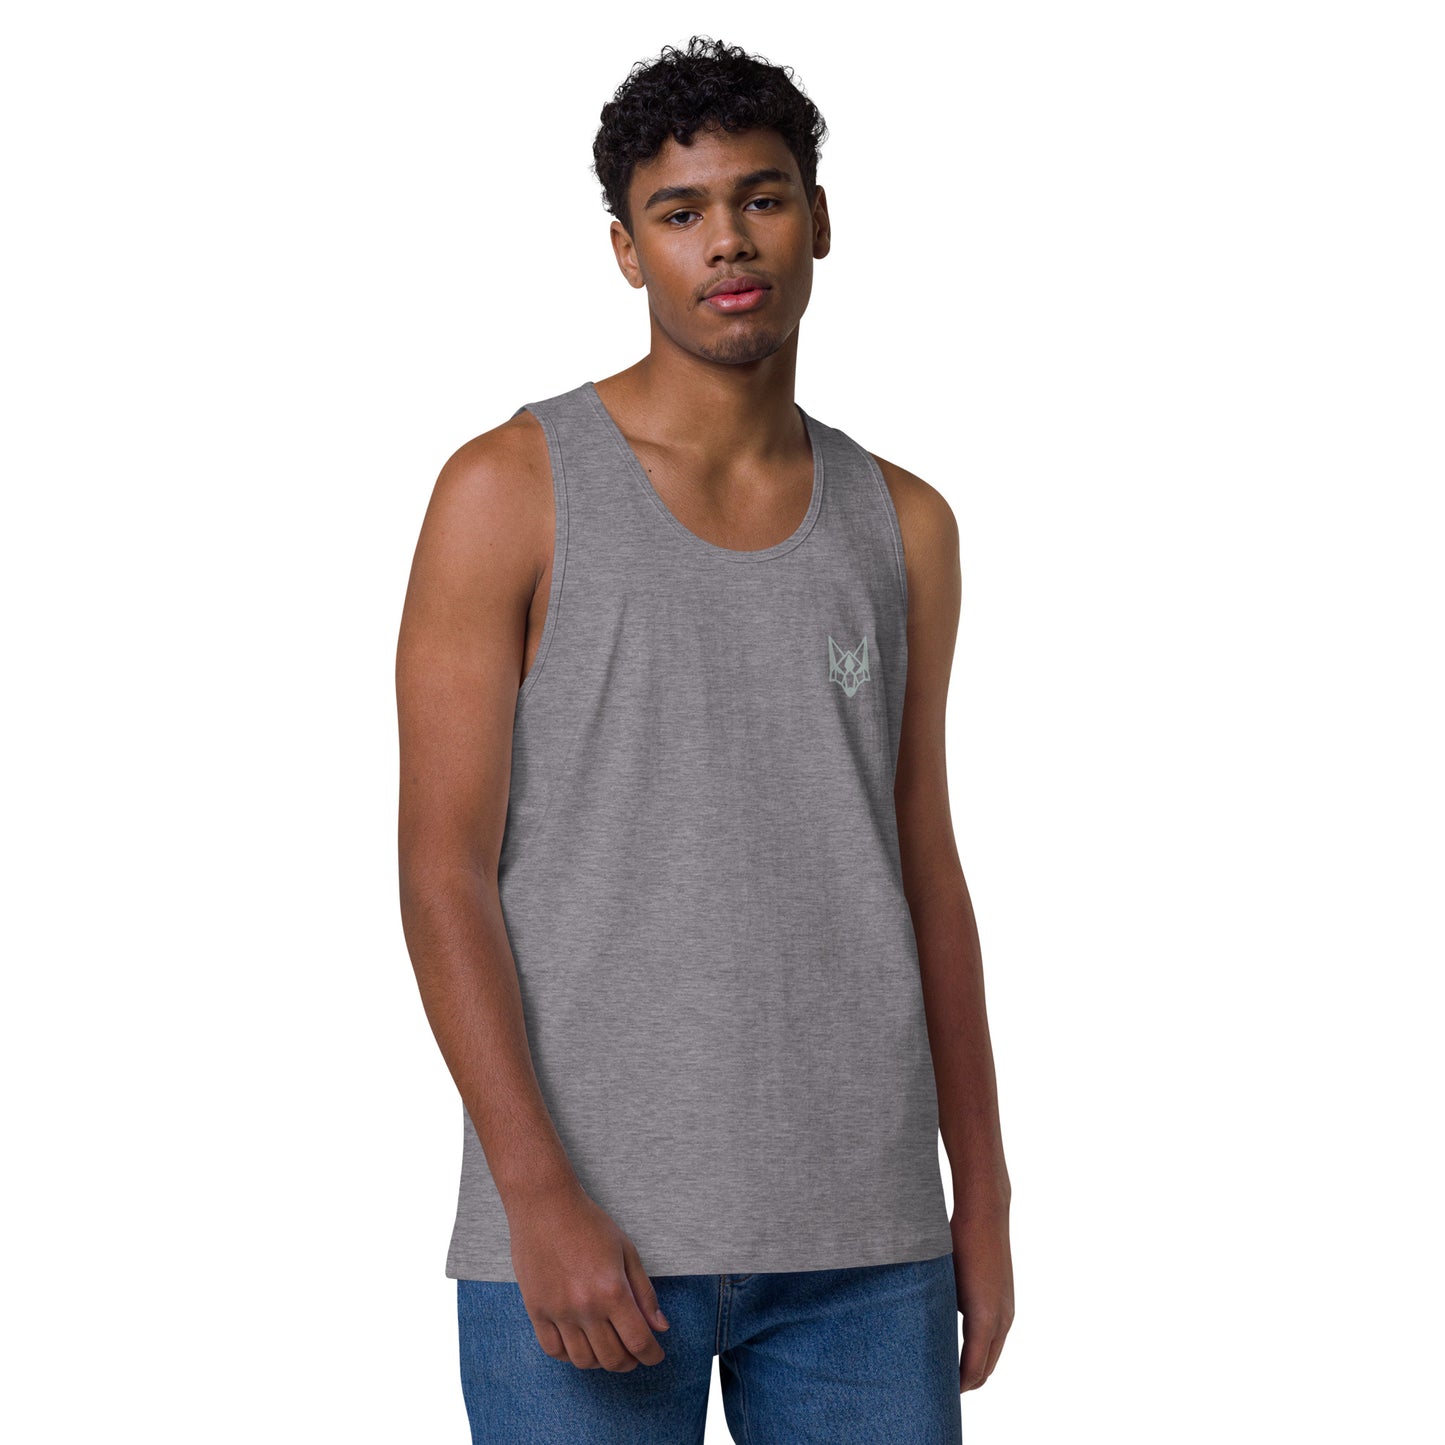 Camiseta sin mangas premium para hombre de Hilltop Fox